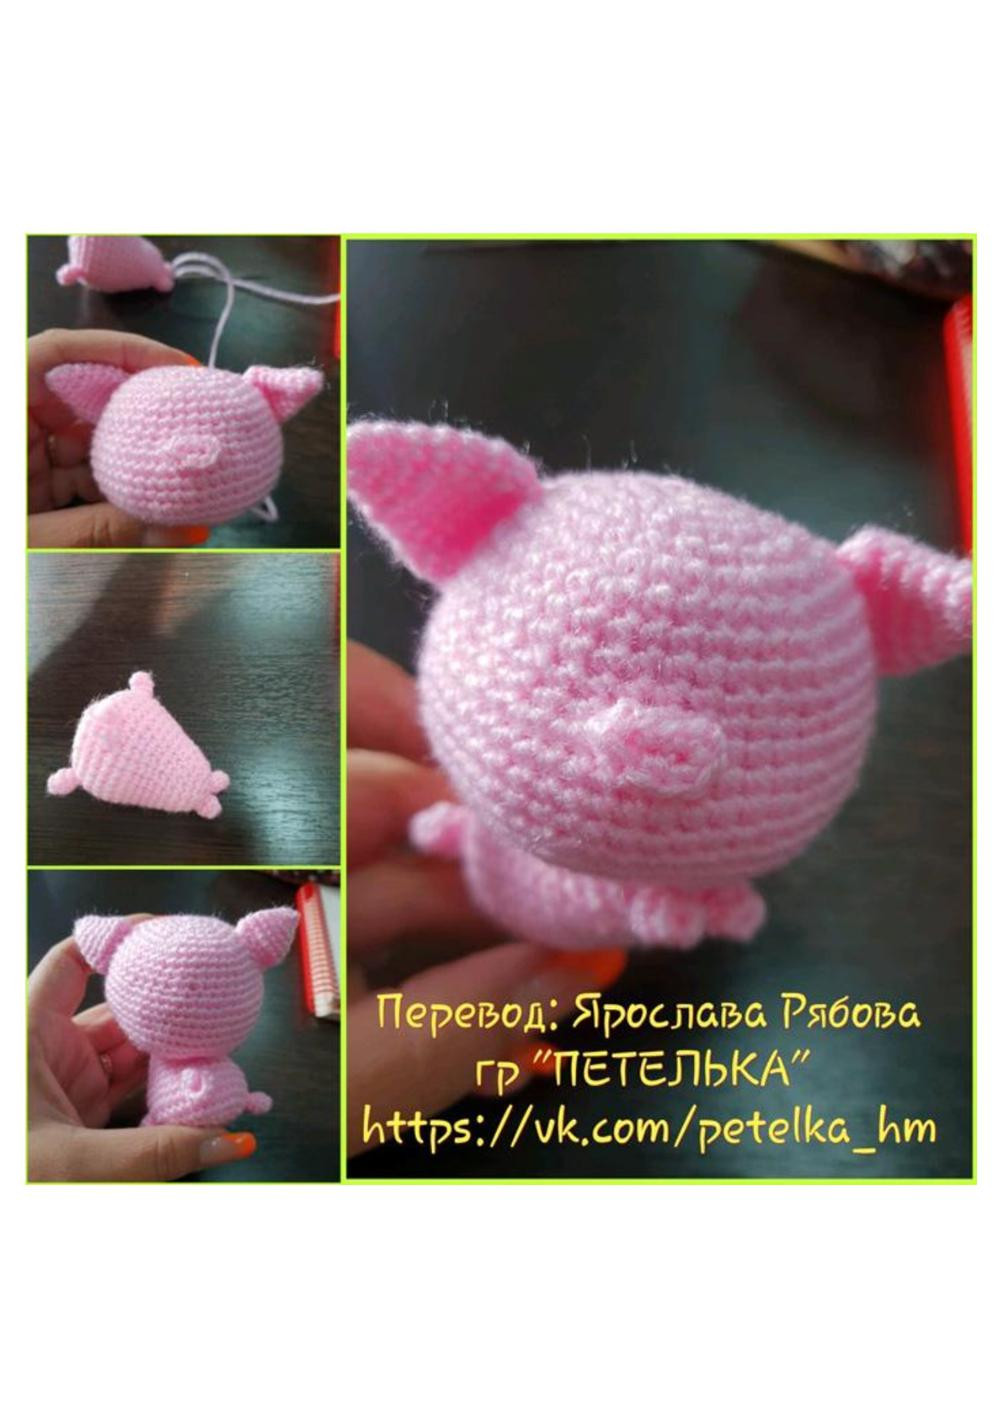 Mao Mu Mu - Flying pig crochet pattern